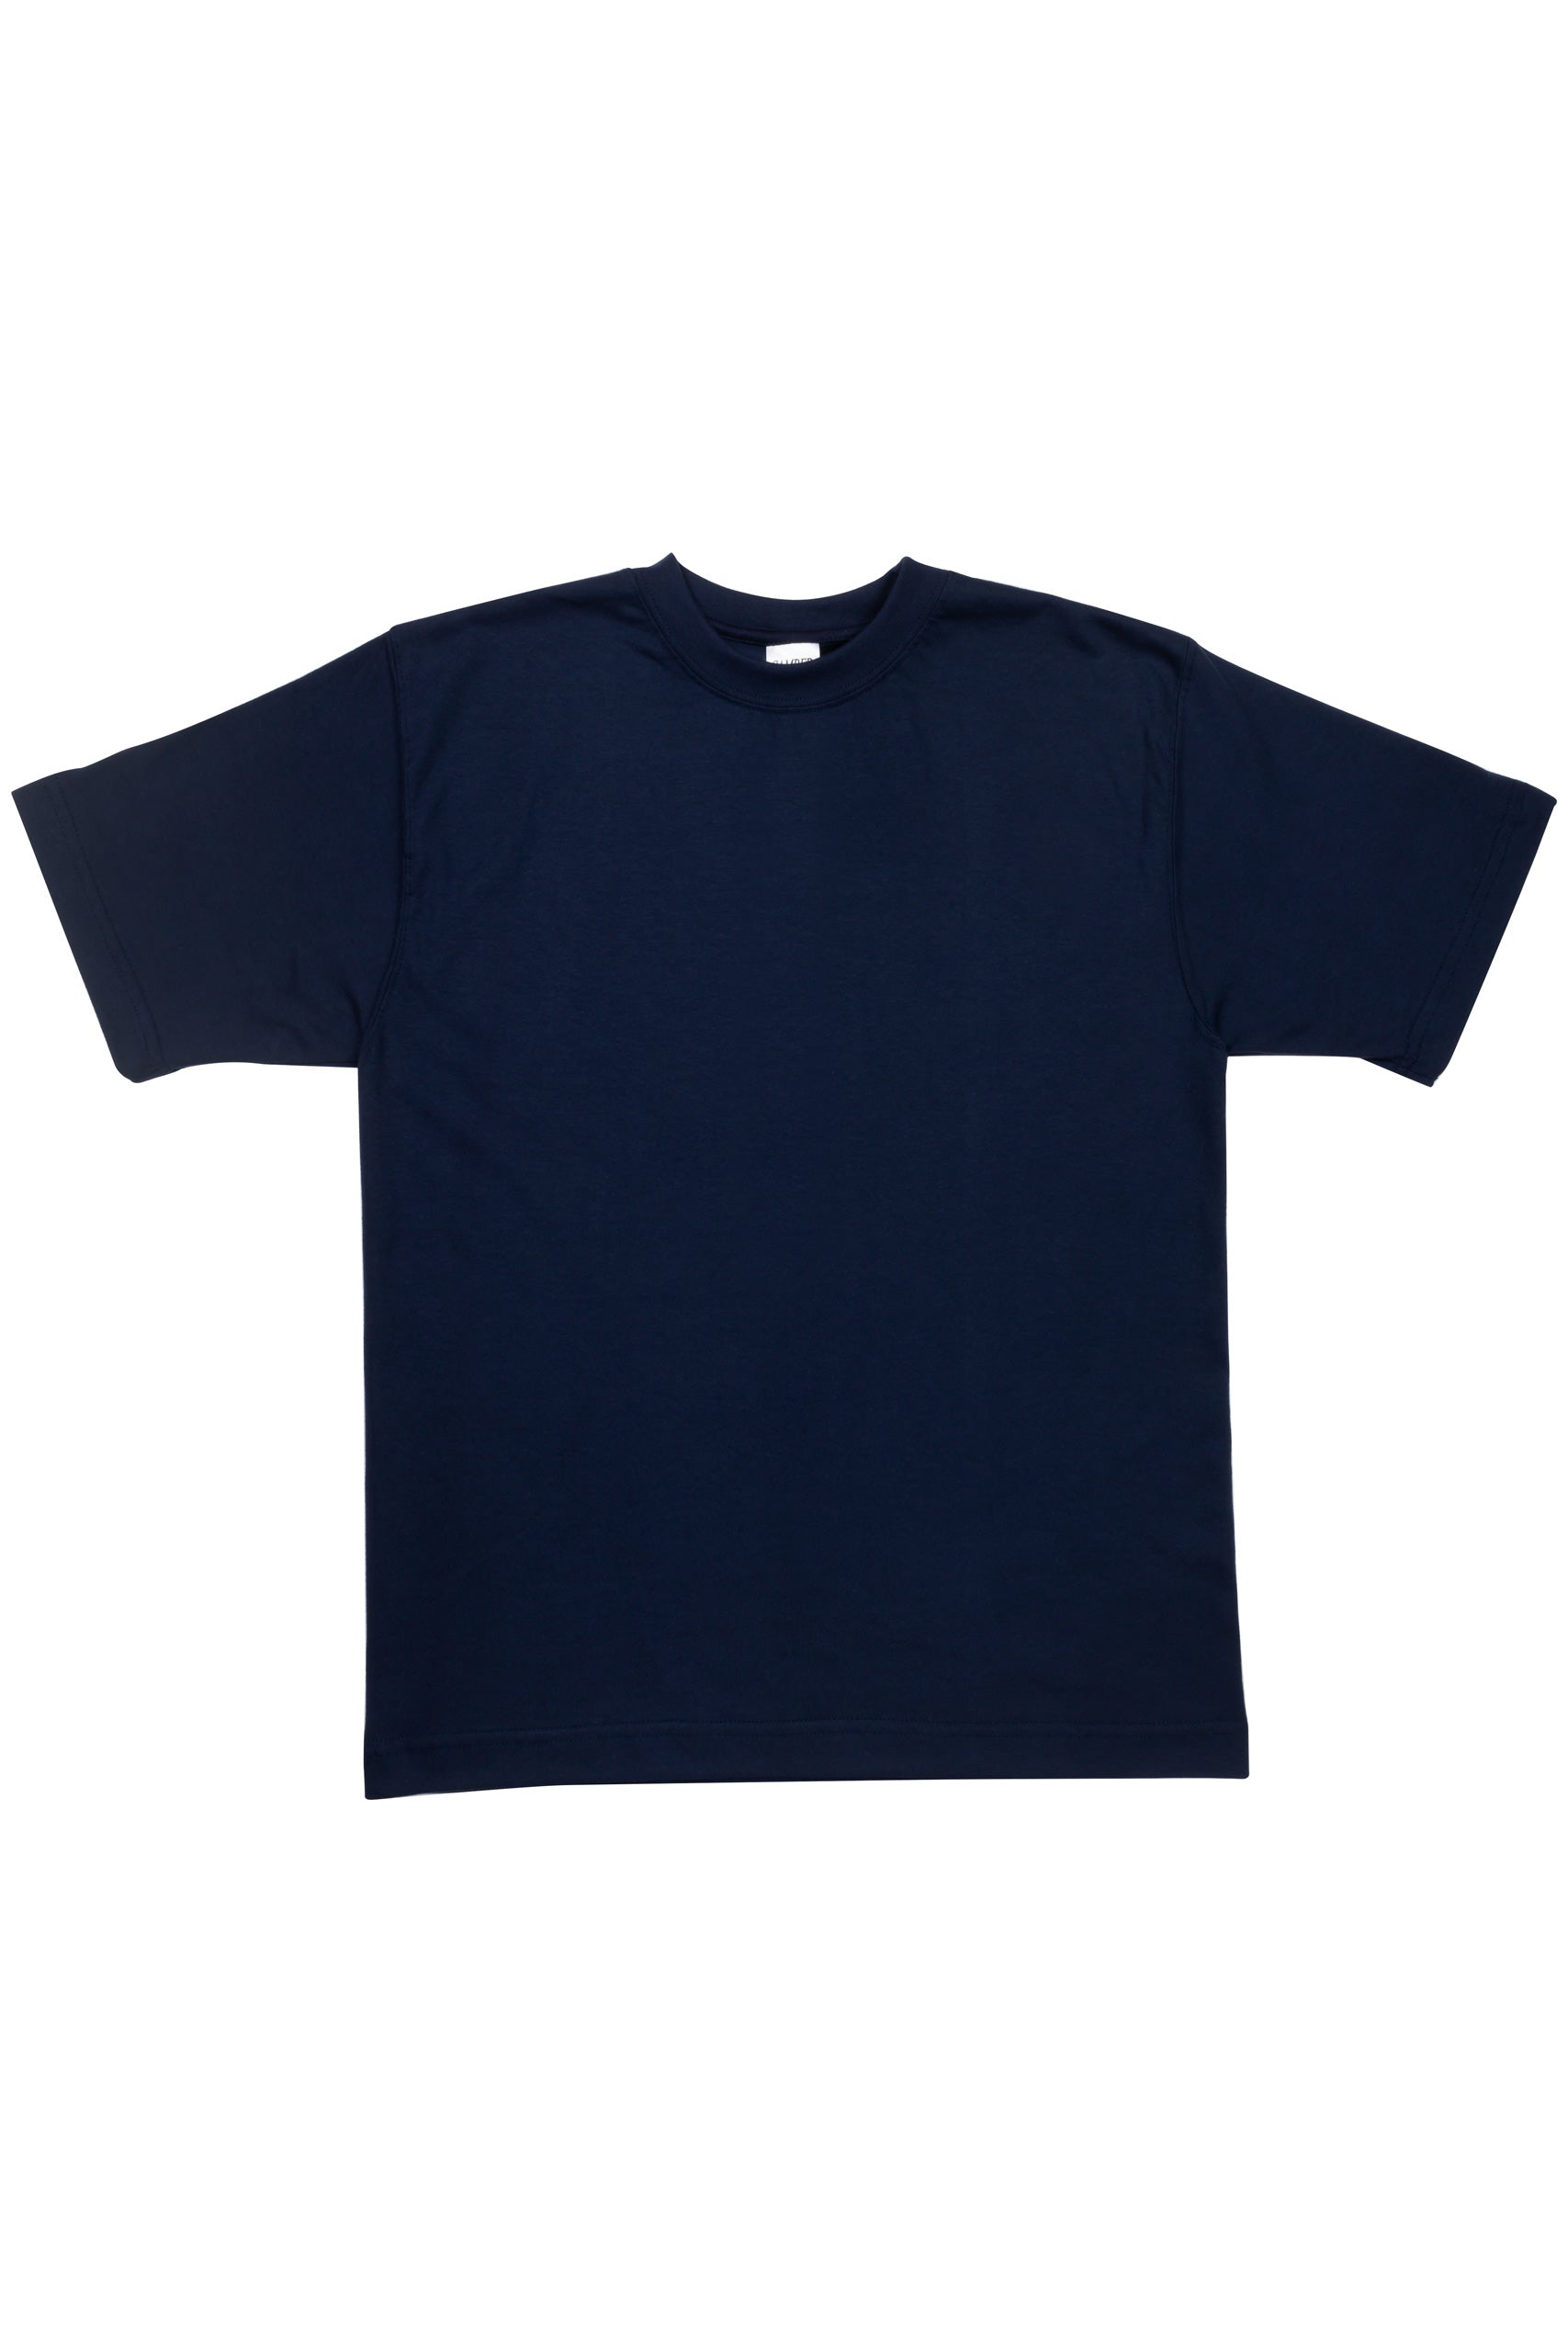 T-Shirt Clothiers Embark USA 6oz – 701 Navy Camber